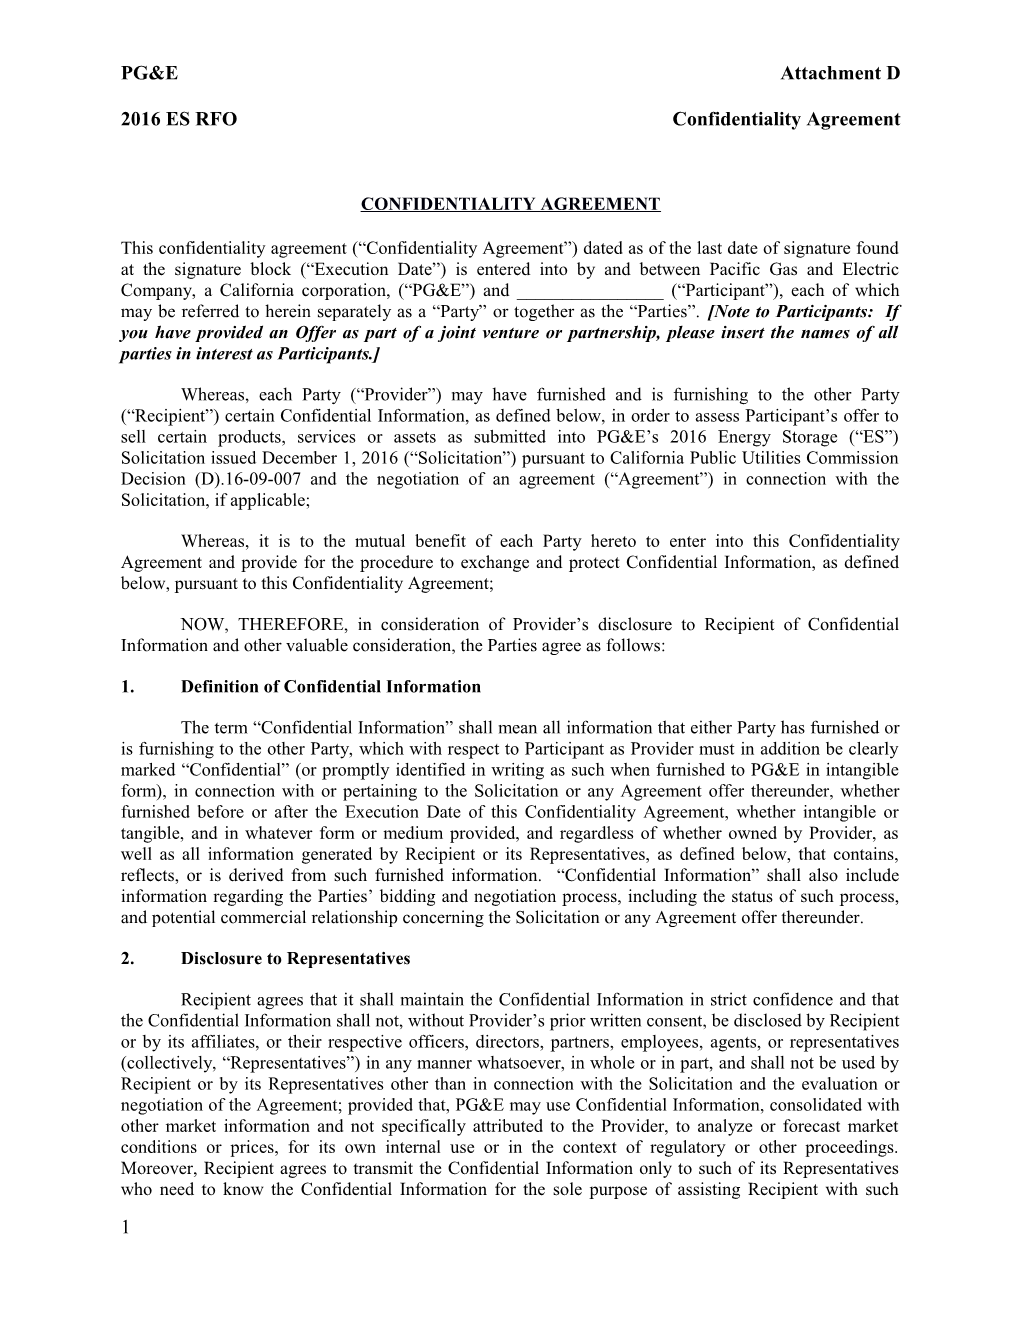 2016 ES Rfoconfidentiality Agreement